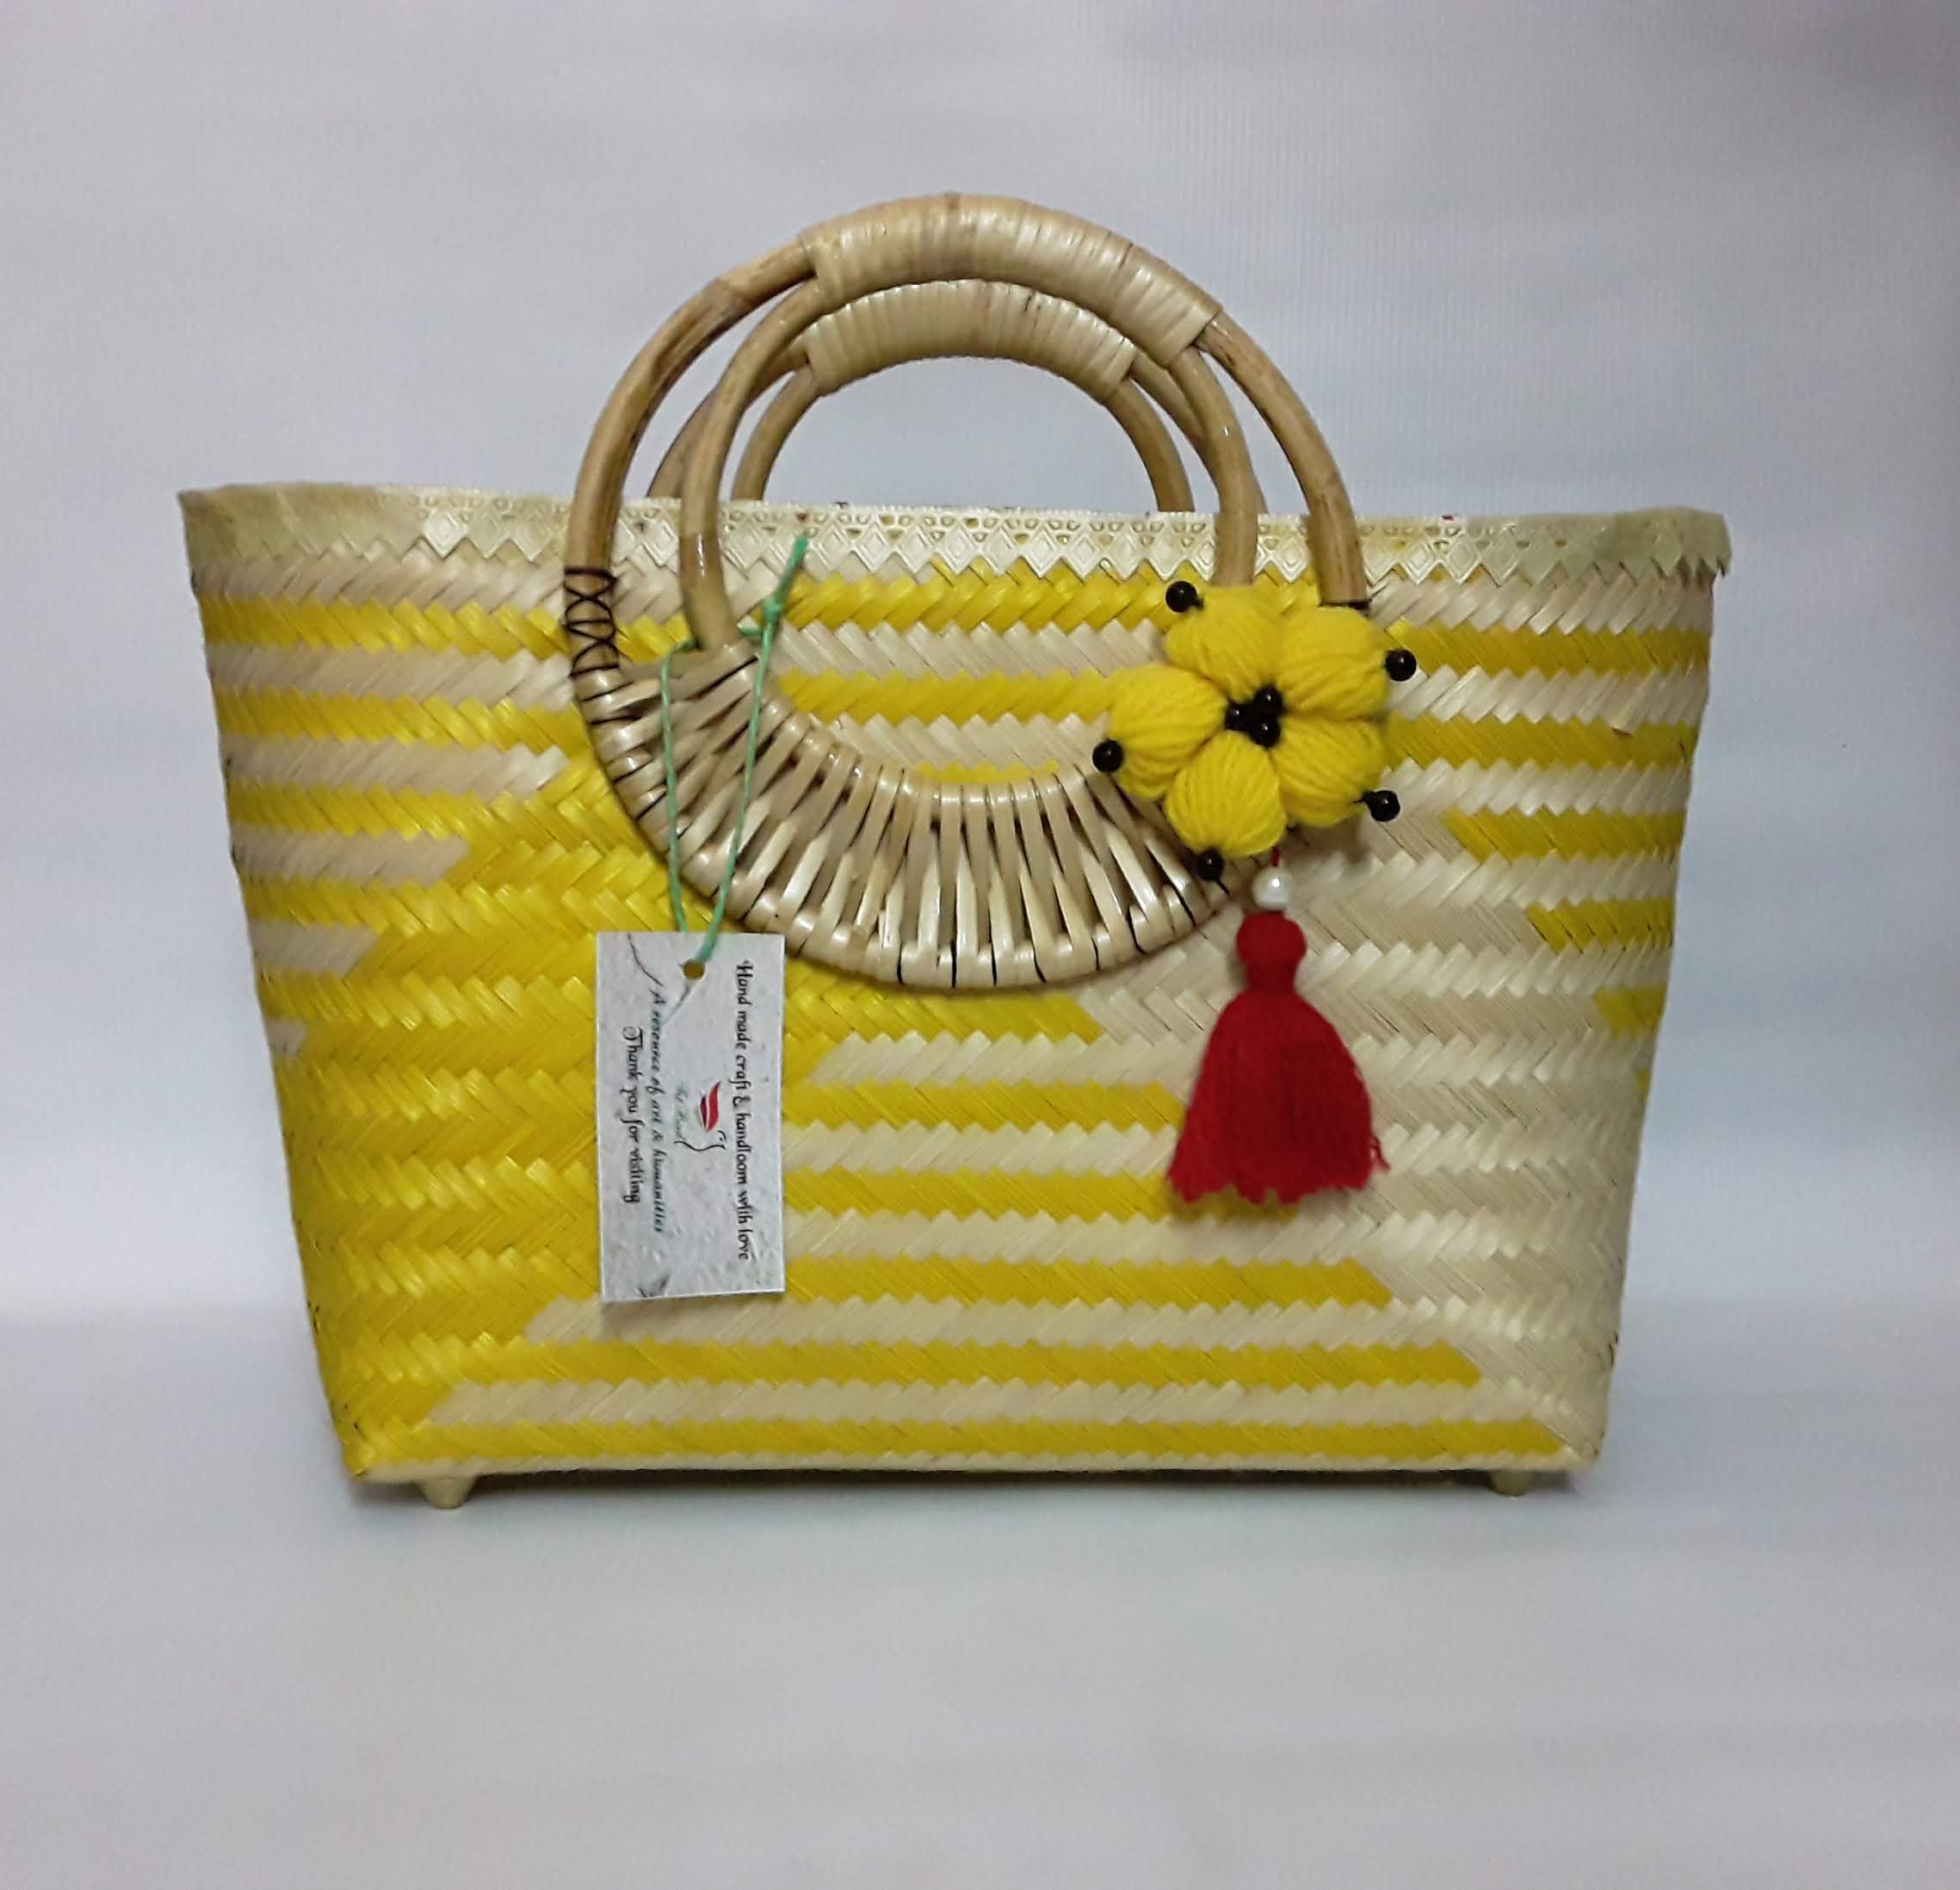 Buy SriShopify Women's Handbag Banjara Traditional Basket Bag Tote Bag  Cotton handmade Front Design (Medium size, Mirror Beads and Thread Work  Handcraft, Maroon) at Amazon.in